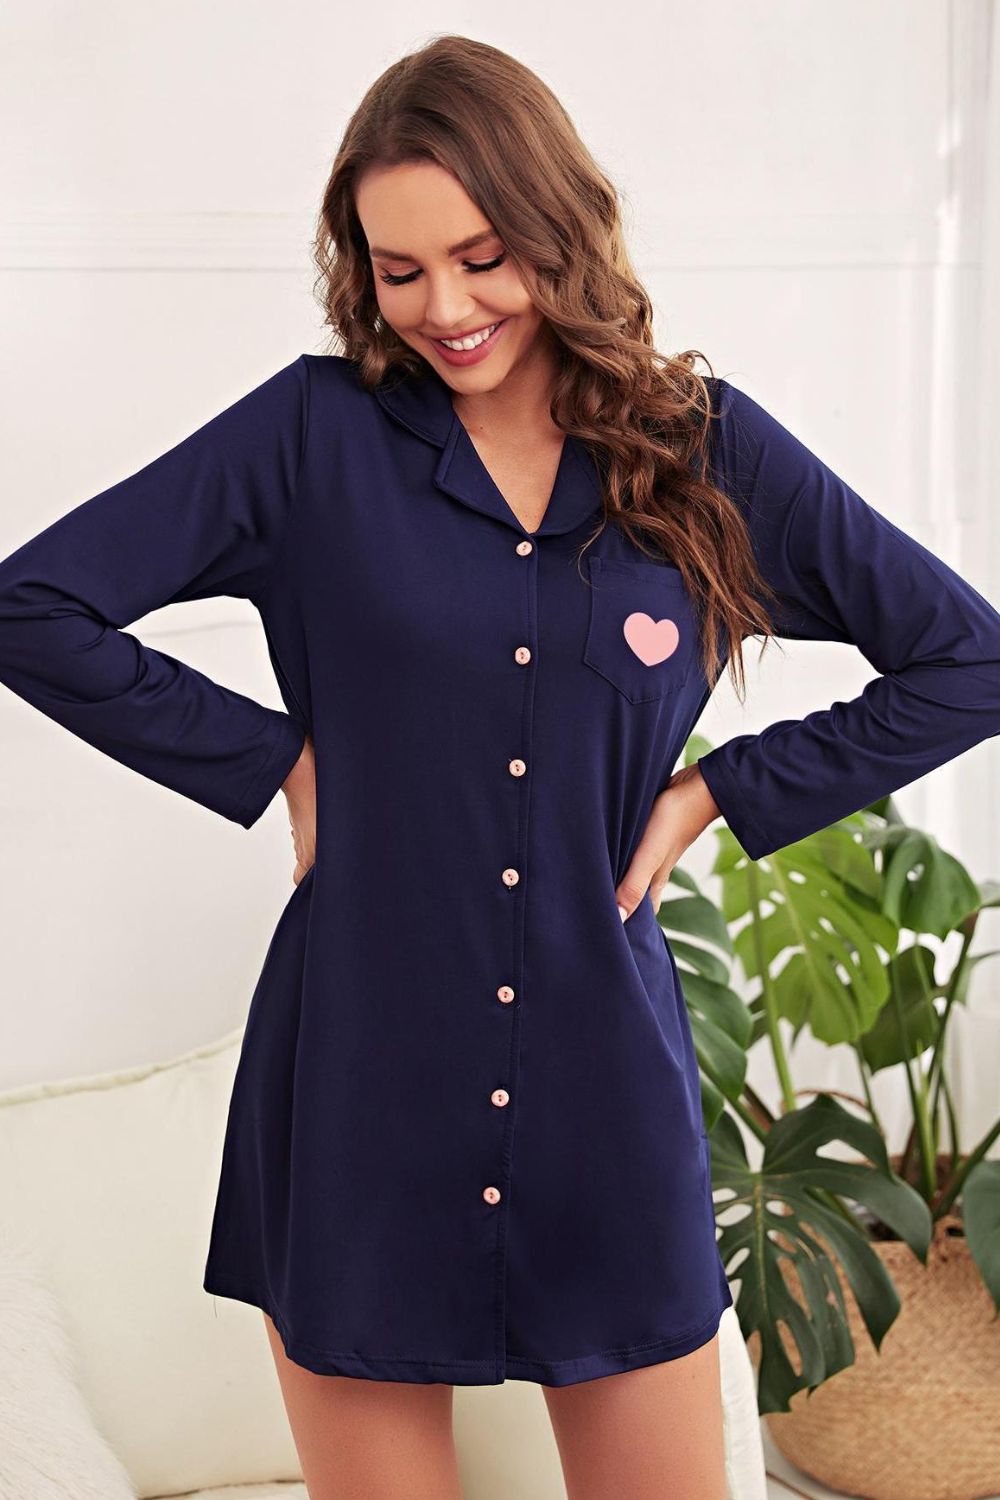 SOCOMFY Heart Graphic Lapel Collar Night Shirt Dress